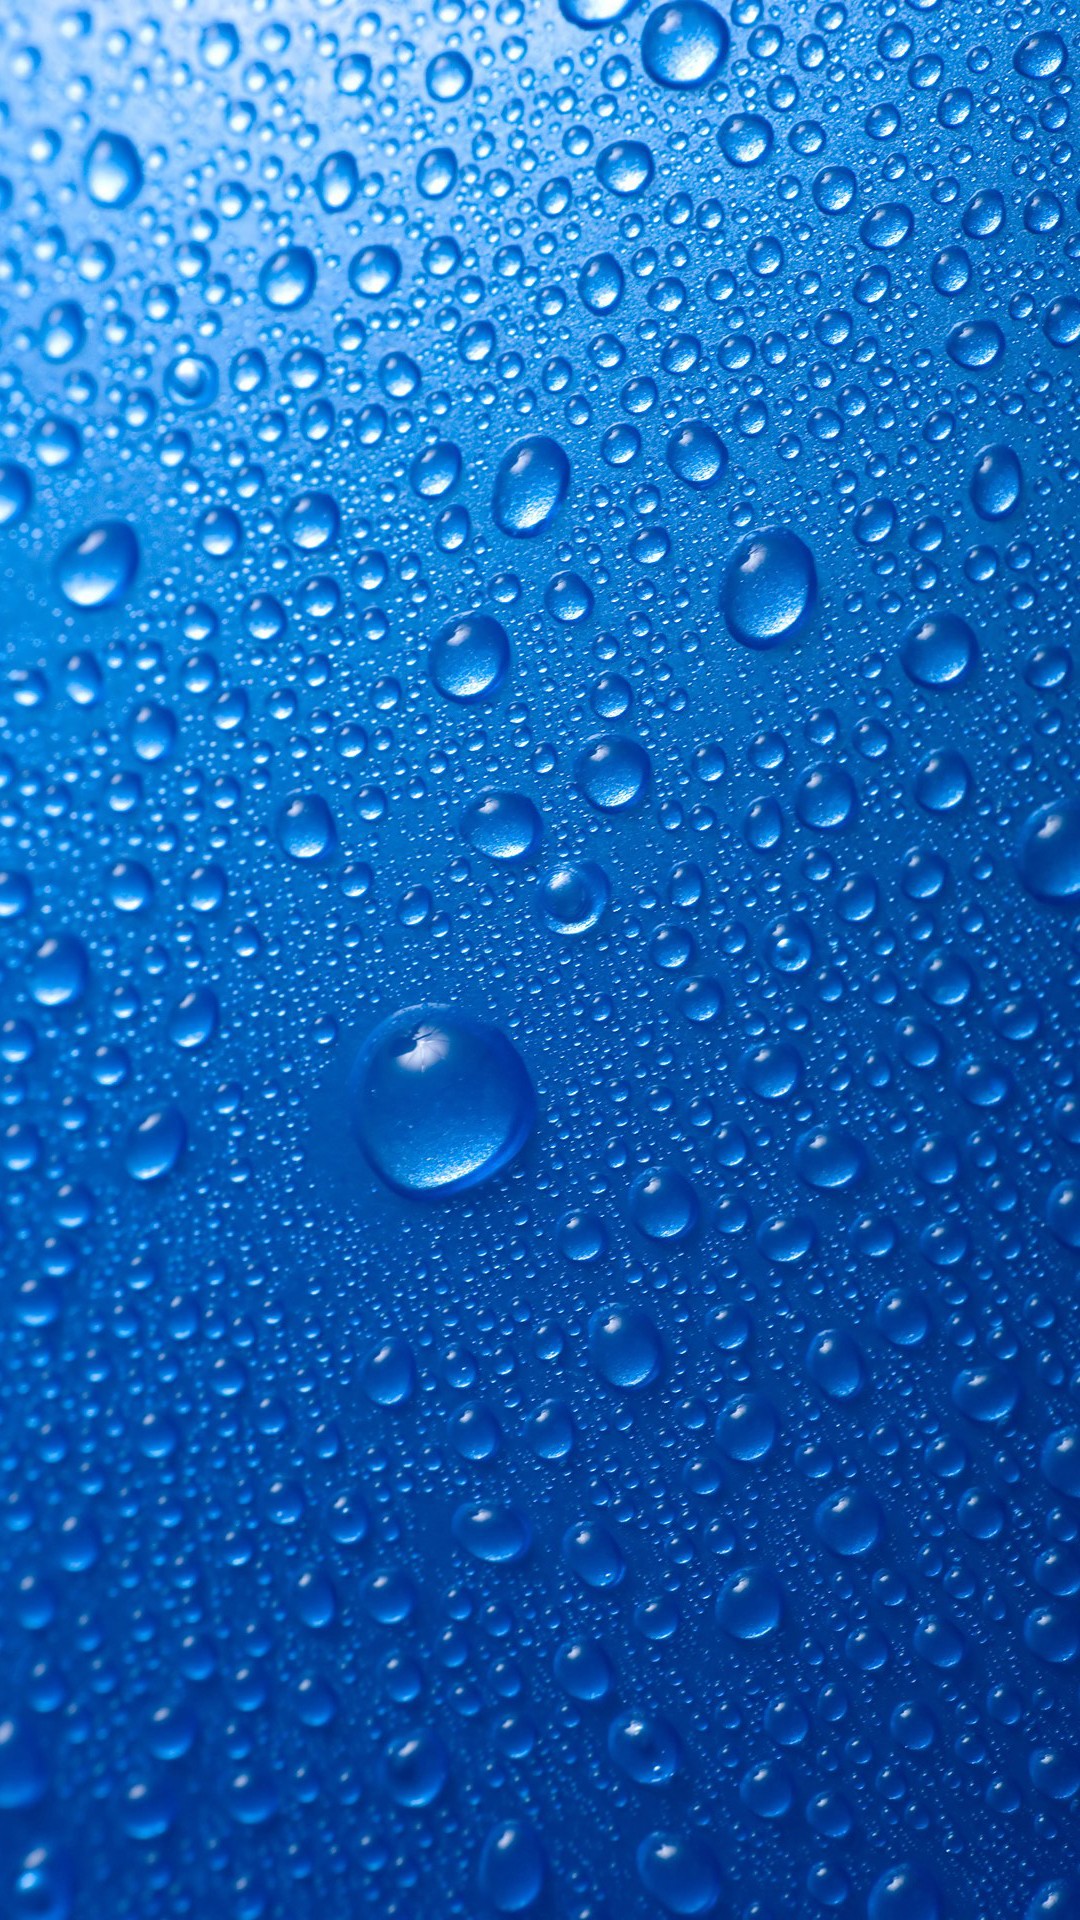 Blue Water iPhone Wallpaper HD resolution 1080x1920